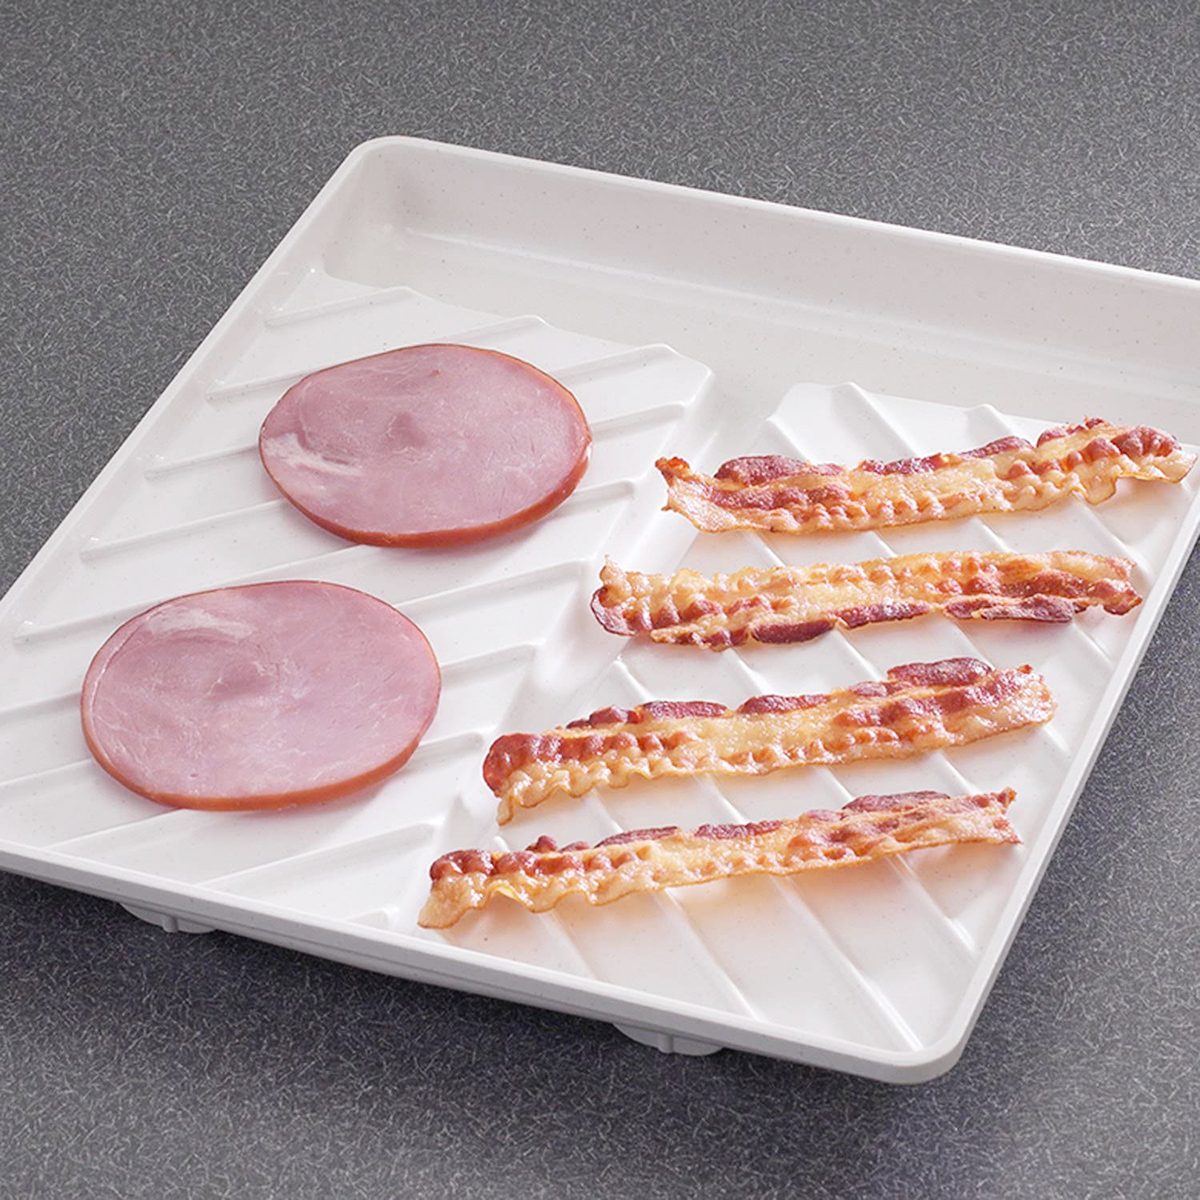 https://www.tasteofhome.com/wp-content/uploads/2019/05/microwave-bacon-tray-via-amazon.com-ecomm.jpg?fit=700%2C700